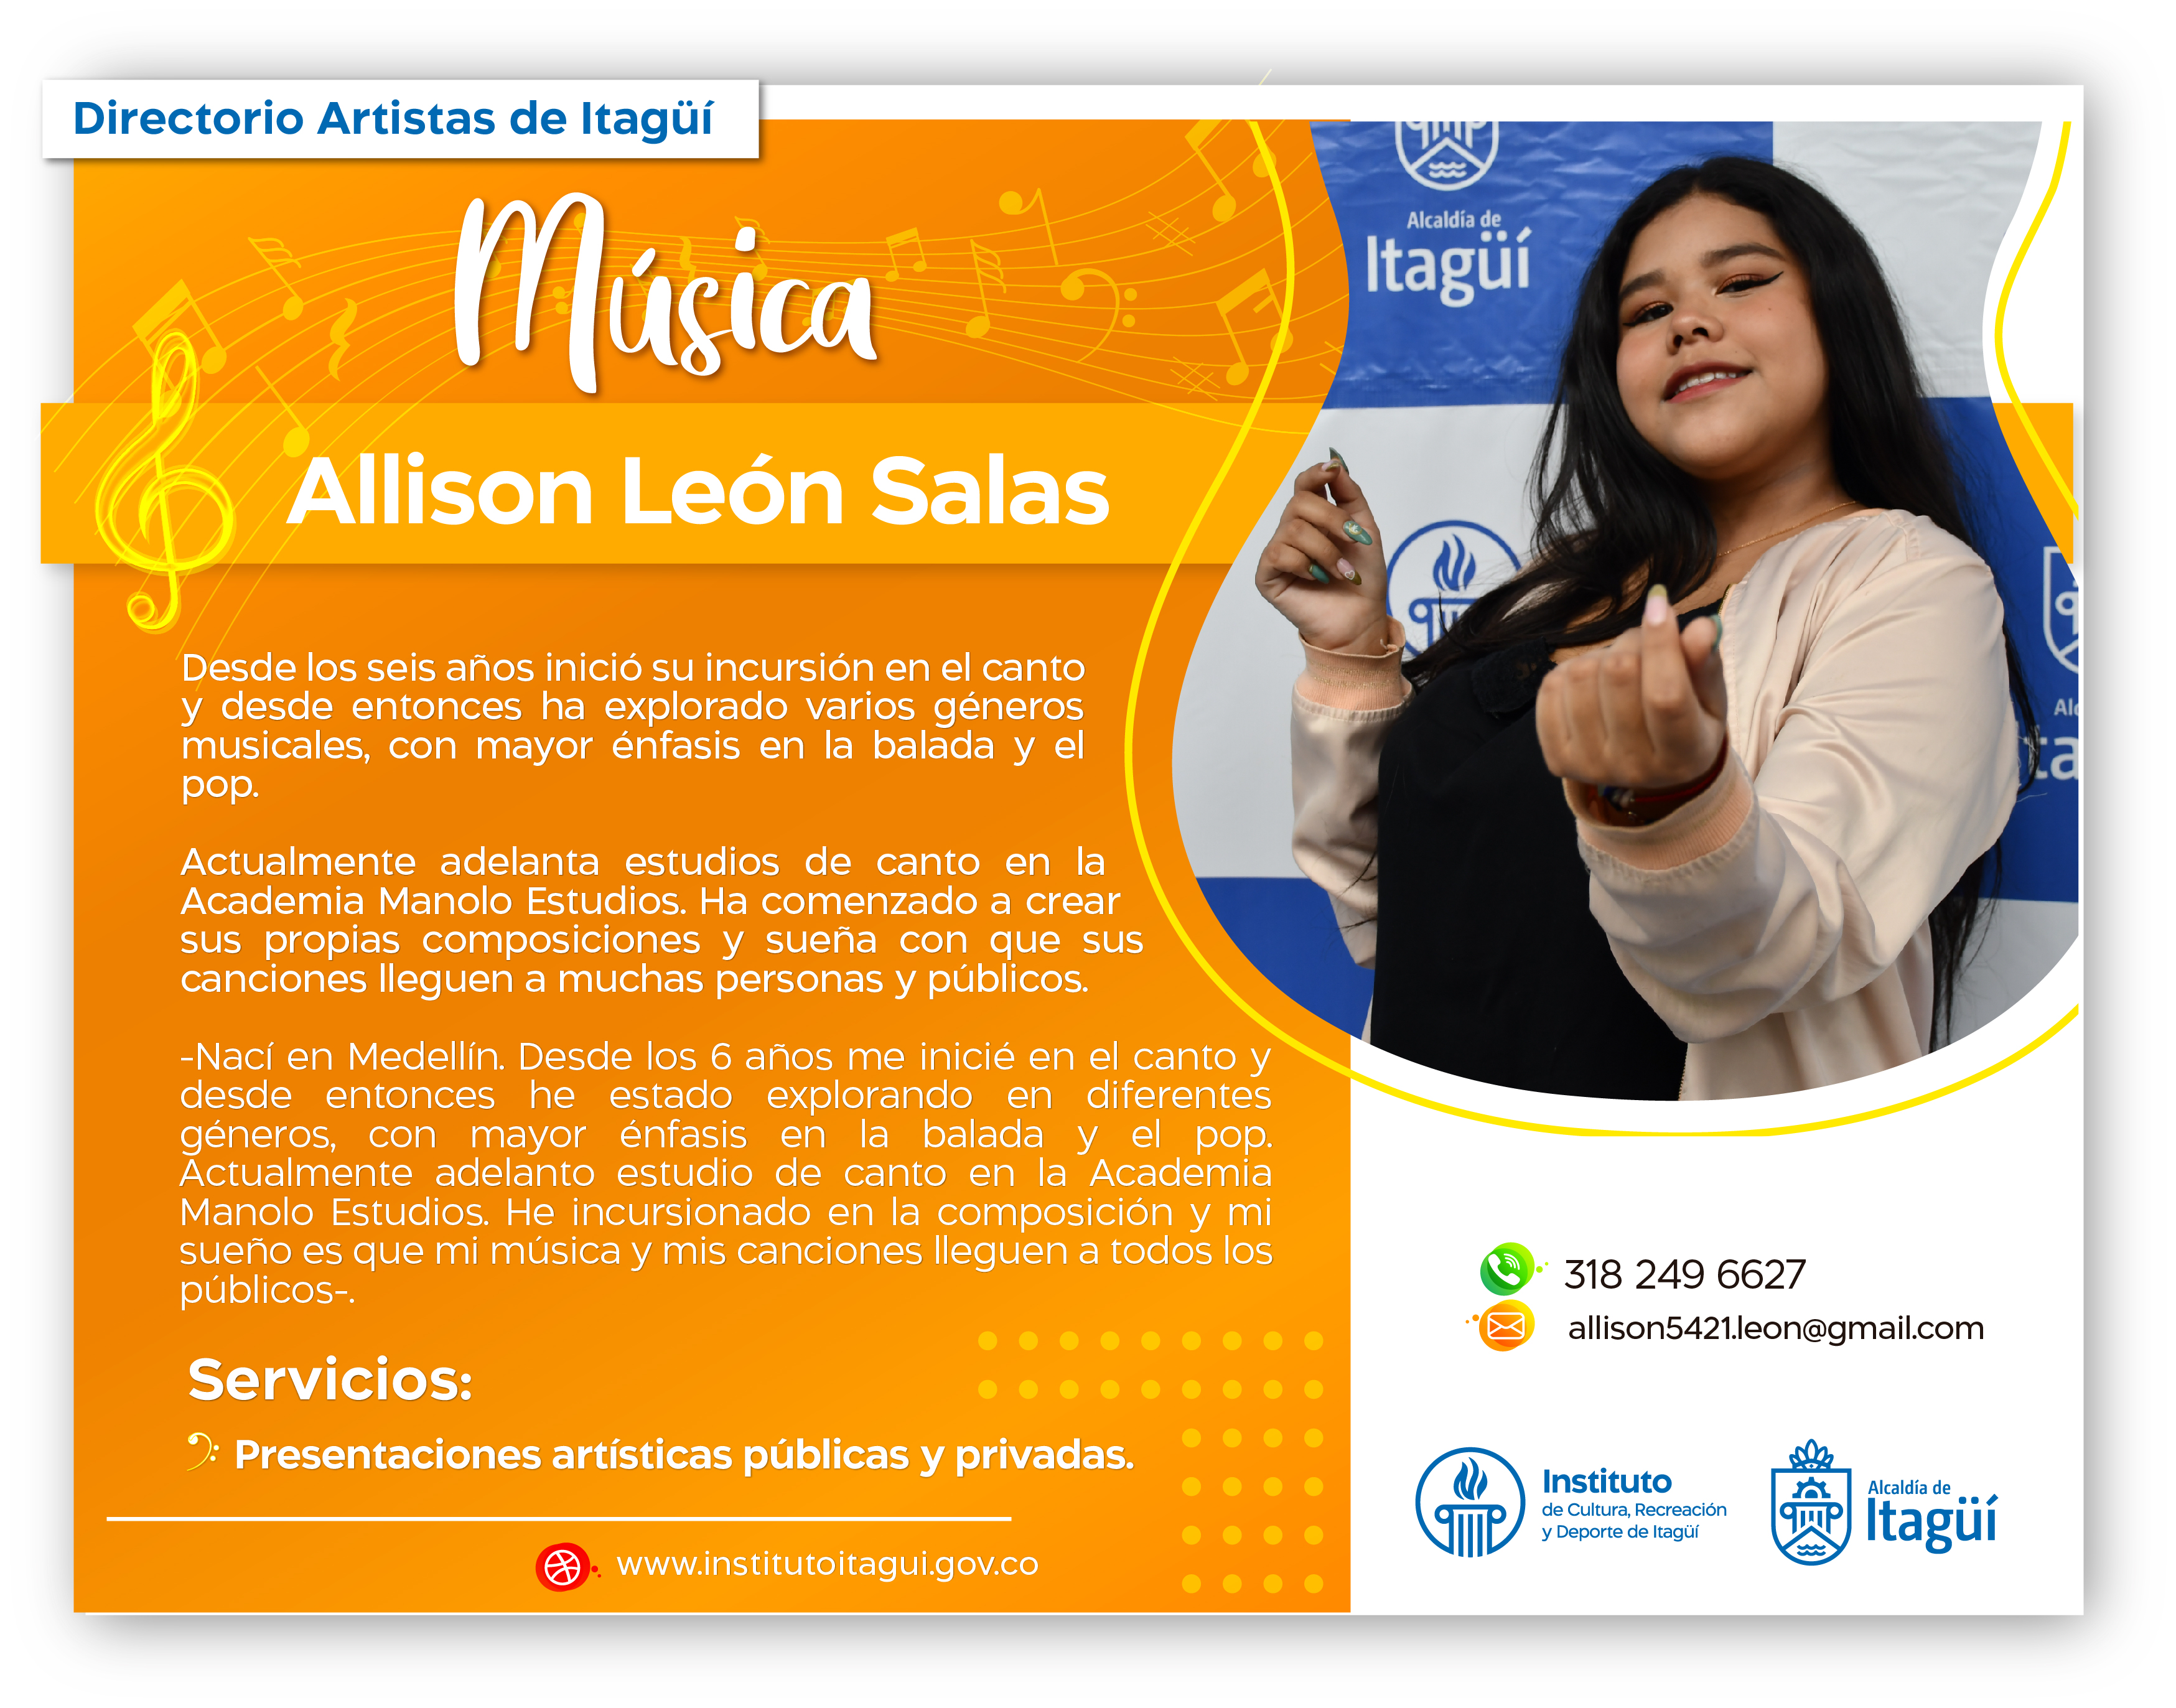 Allison Leon Salas